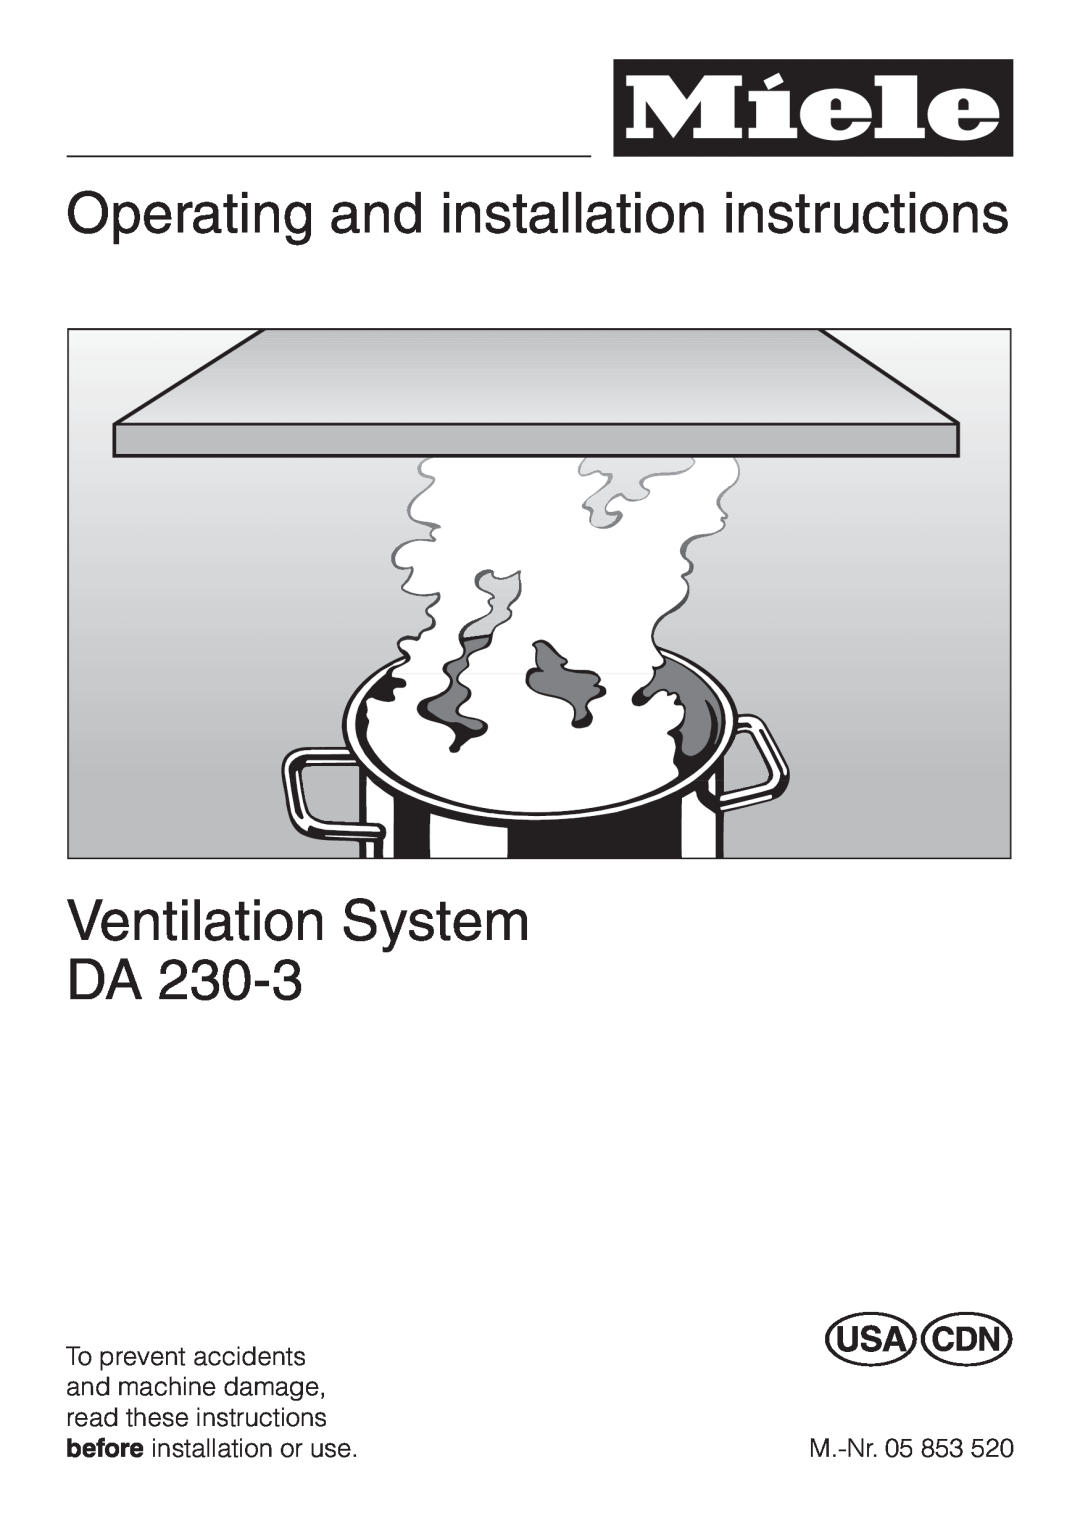 Miele DA 230-3 installation instructions Operating and installation instructions, Ventilation System DA 